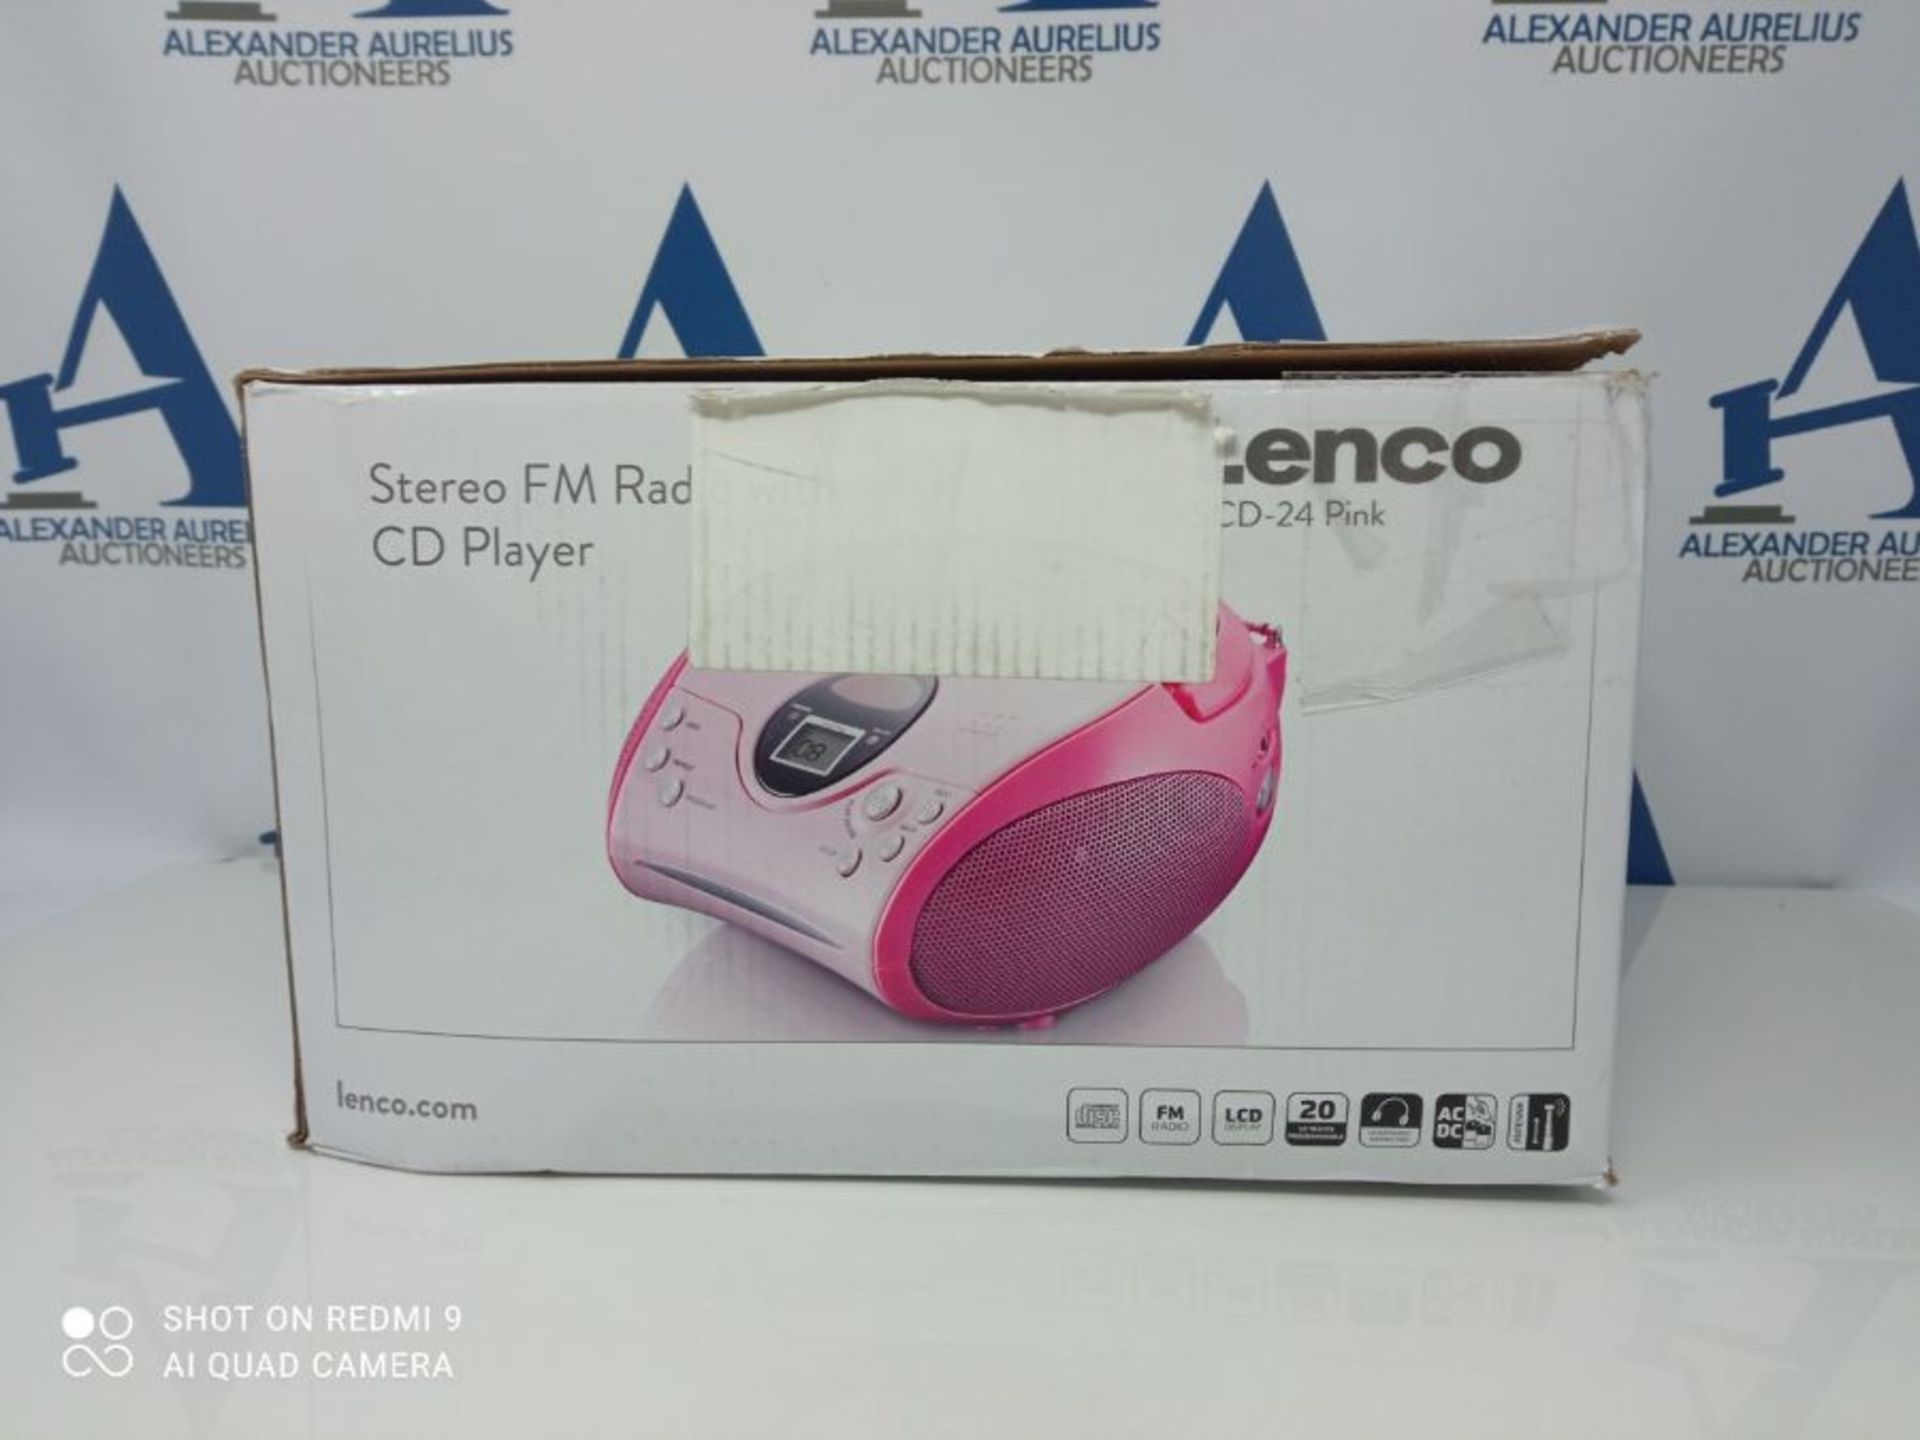 Lenco SCD-24 Stereo UKW-Radio mit CD-Player und Teleskopantenne rosa